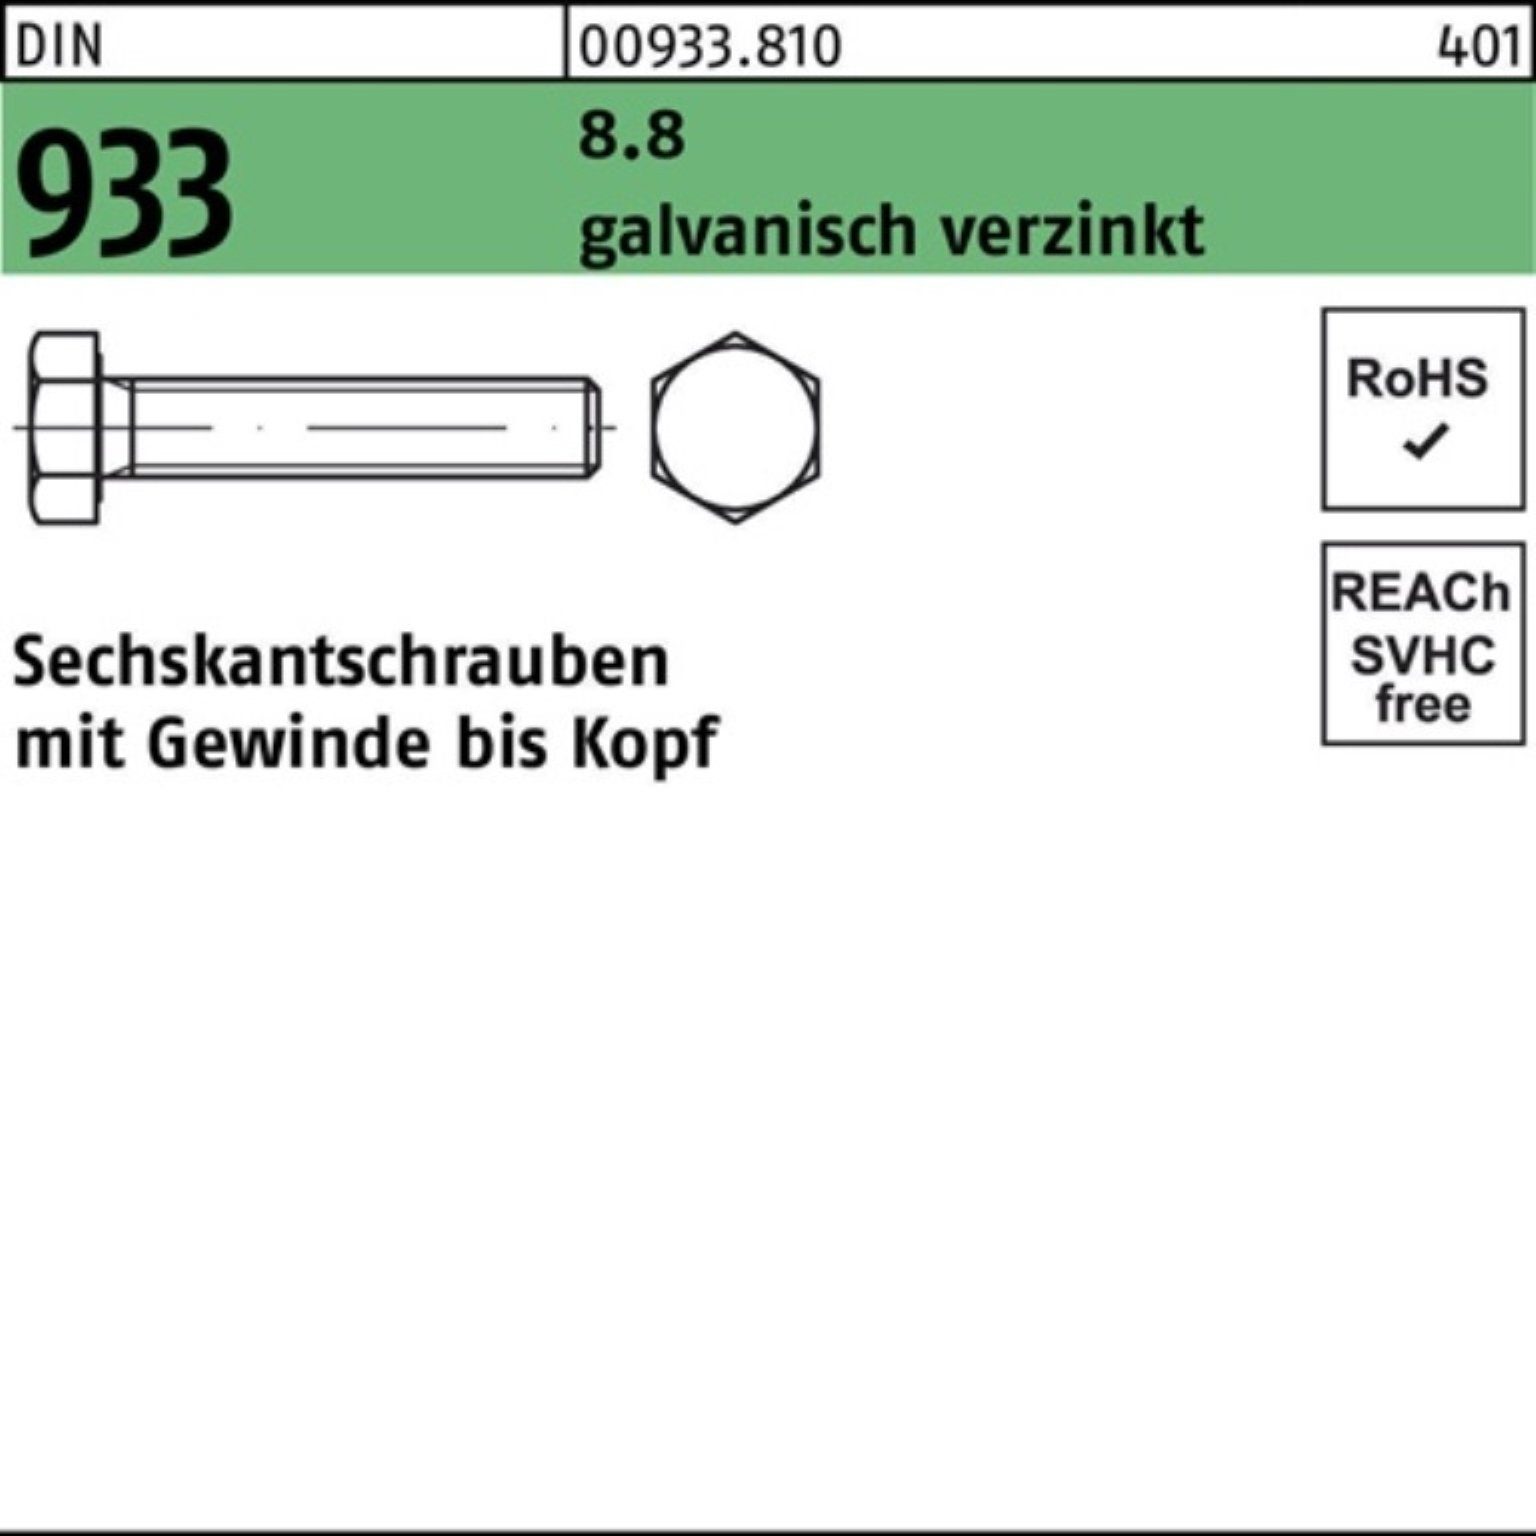 Reyher Sechskantschraube 100er Pack M36x 200 Stü 933 DIN 1 VG Sechskantschraube 8.8 galv.verz